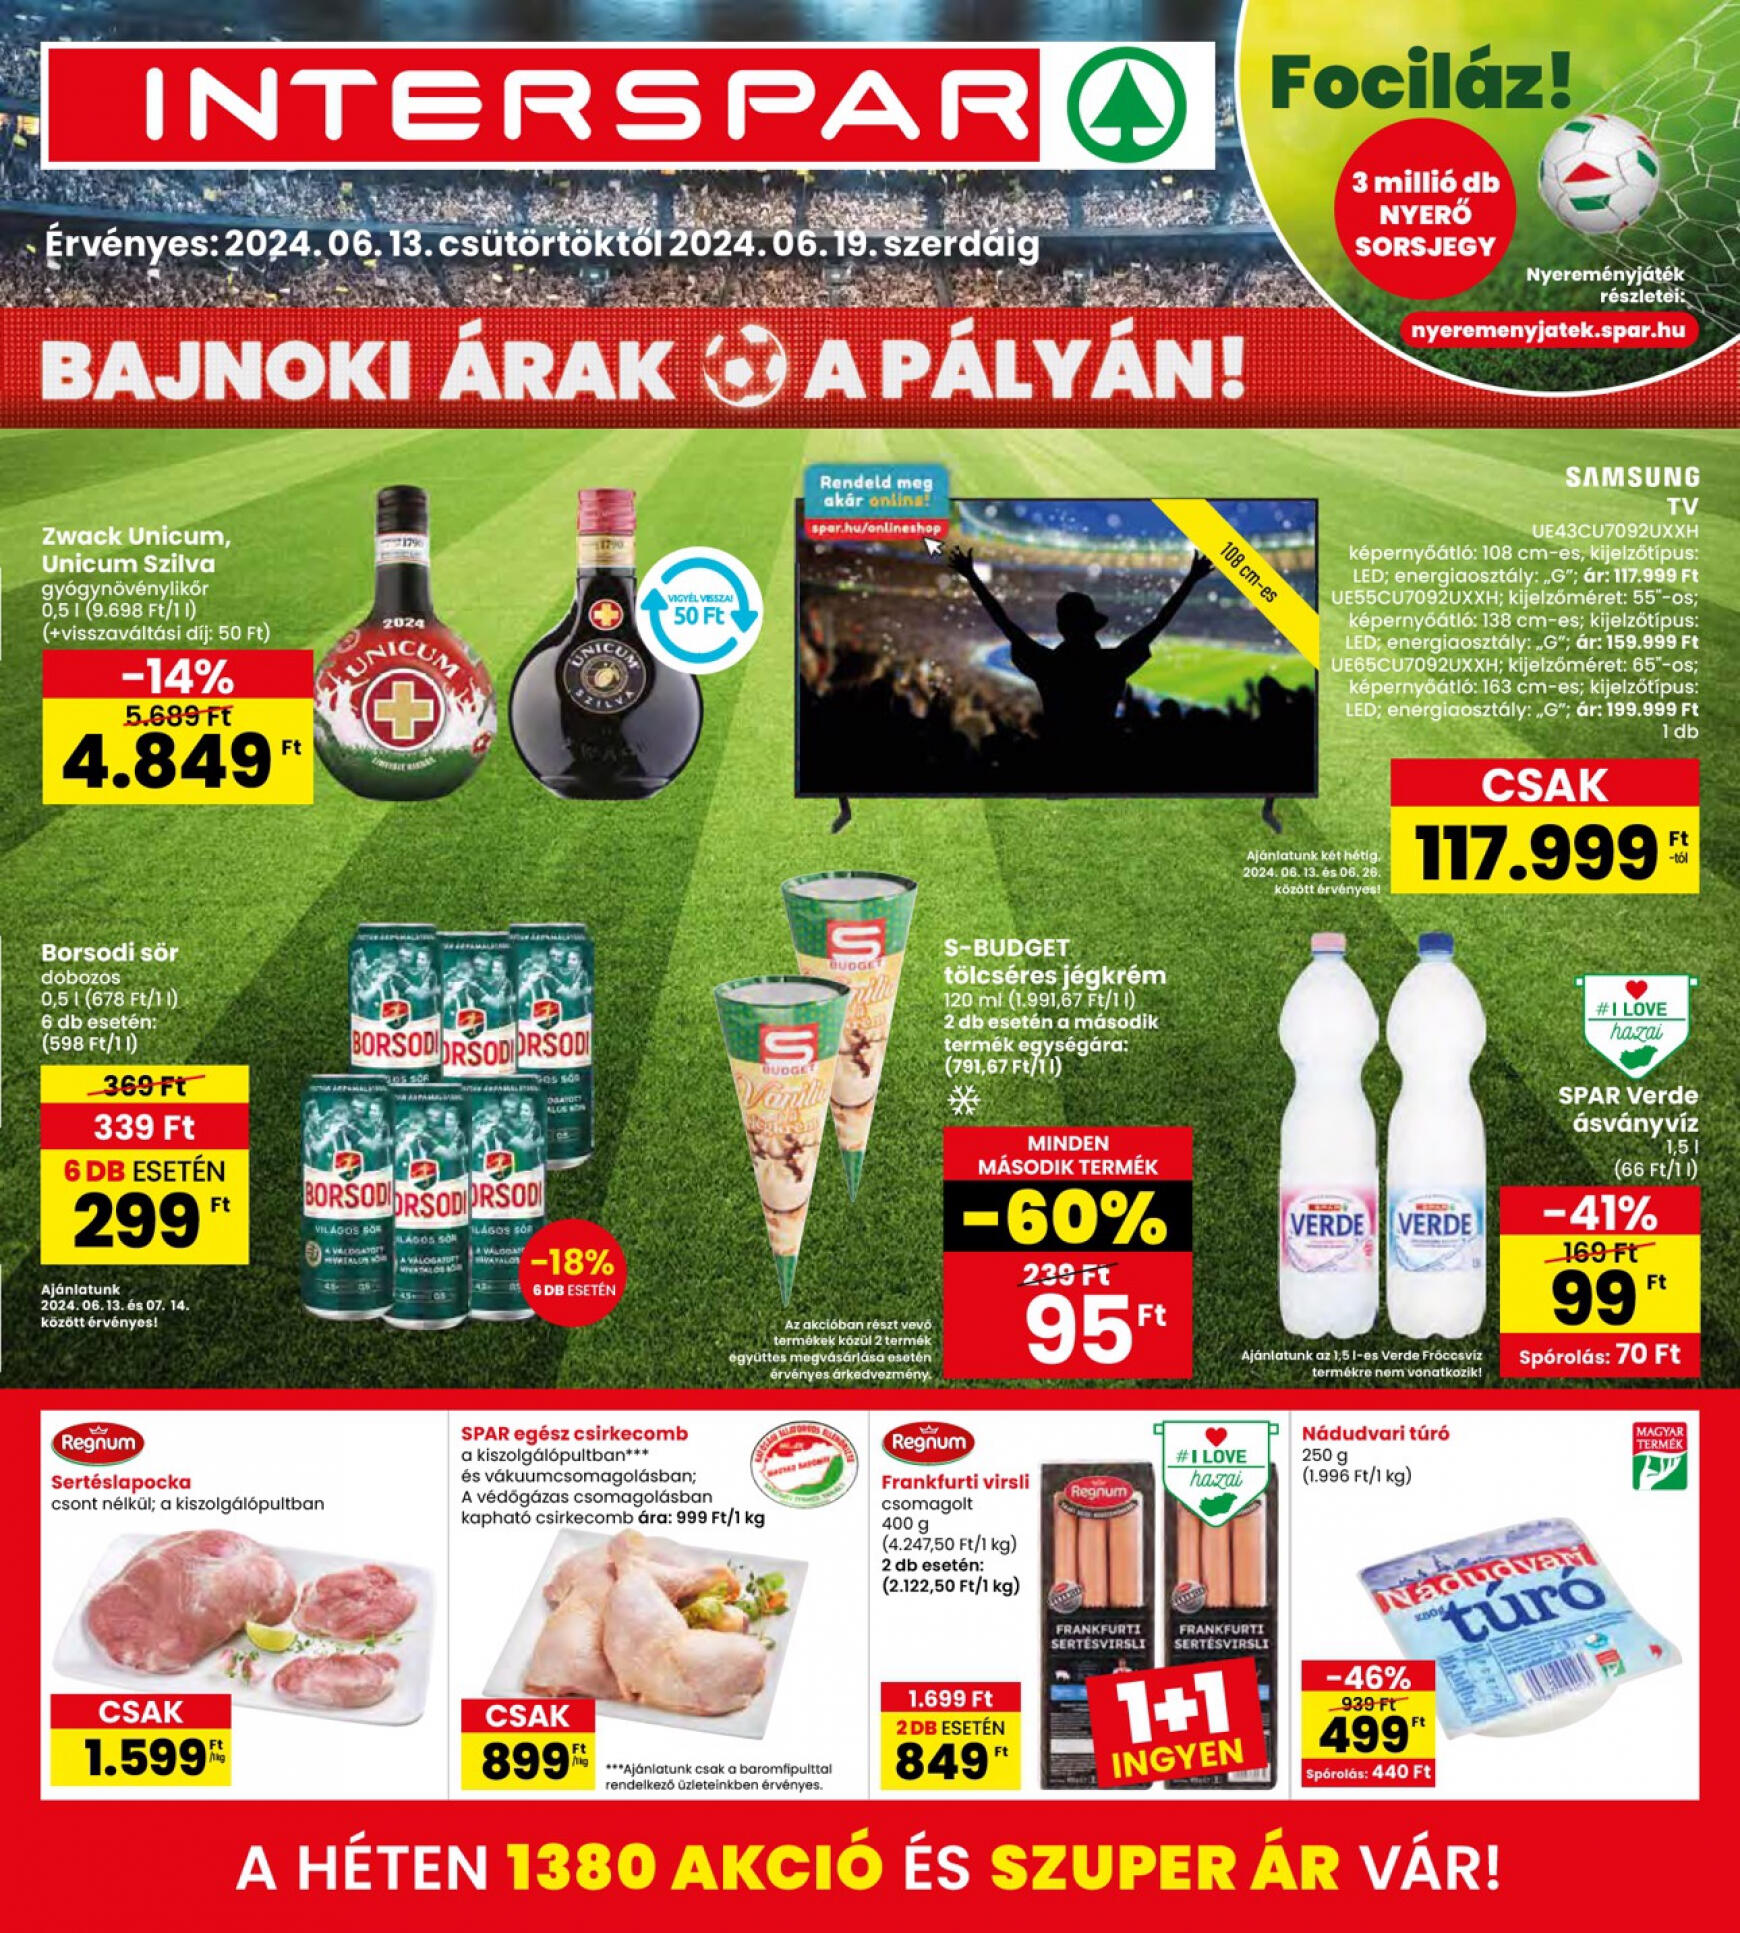 spar - Aktuális újság INTERSPAR 06.13. - 06.19. - page: 1